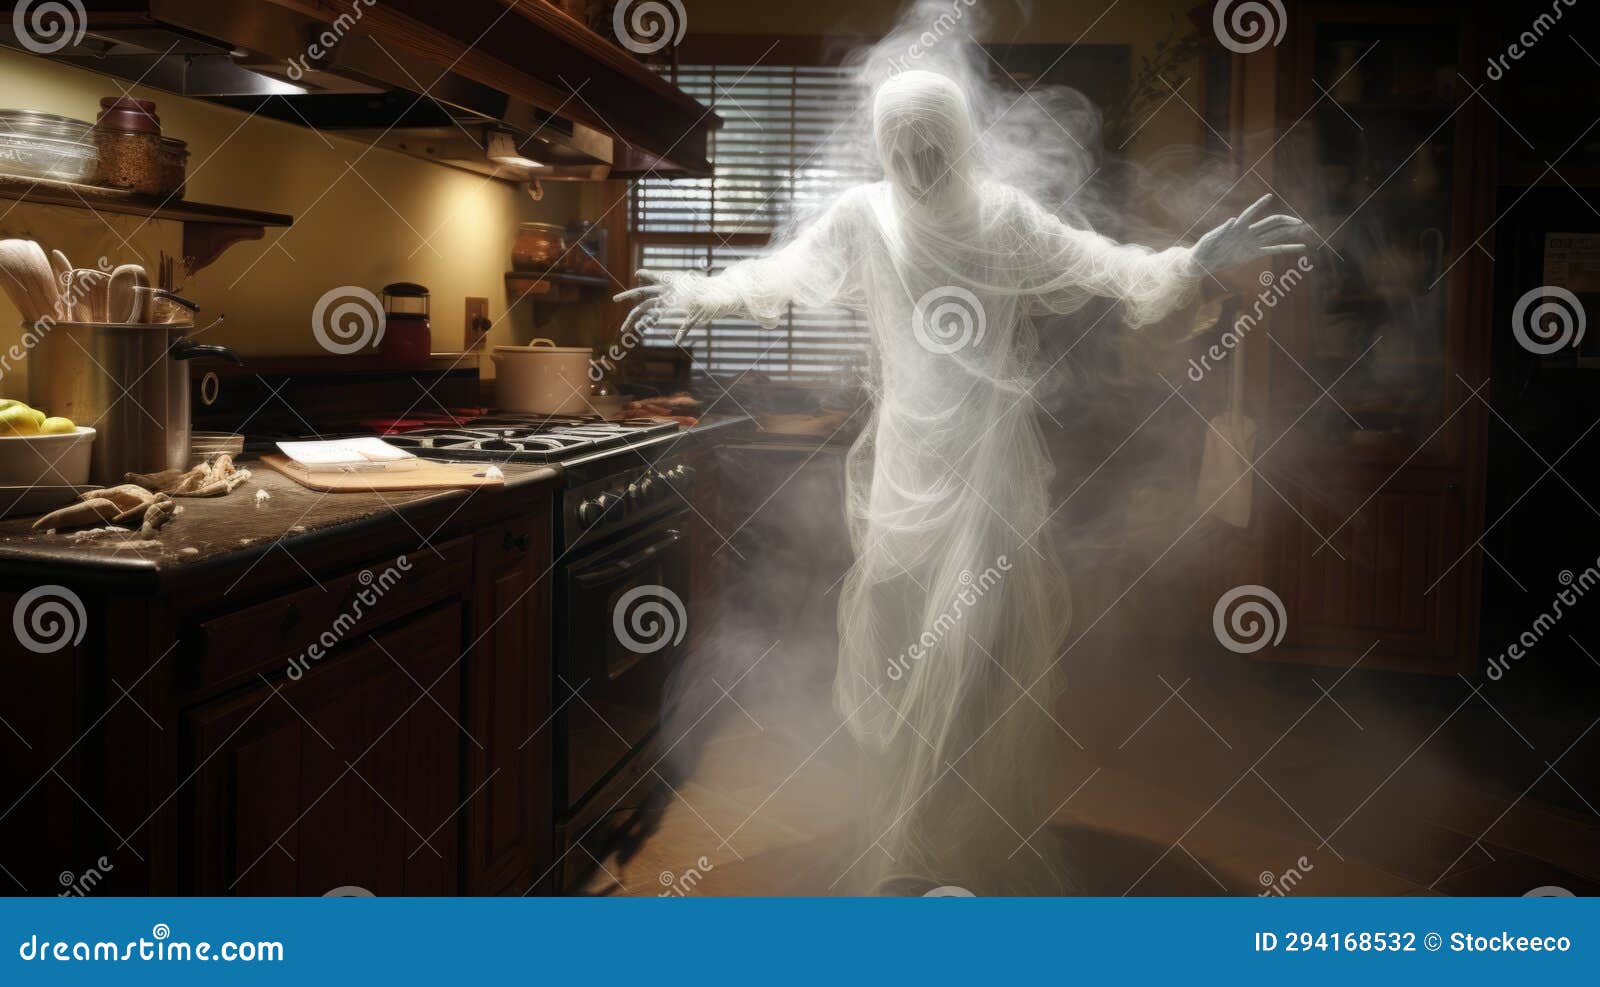 creepy genie ghost in kitchen: ultra realistic photo